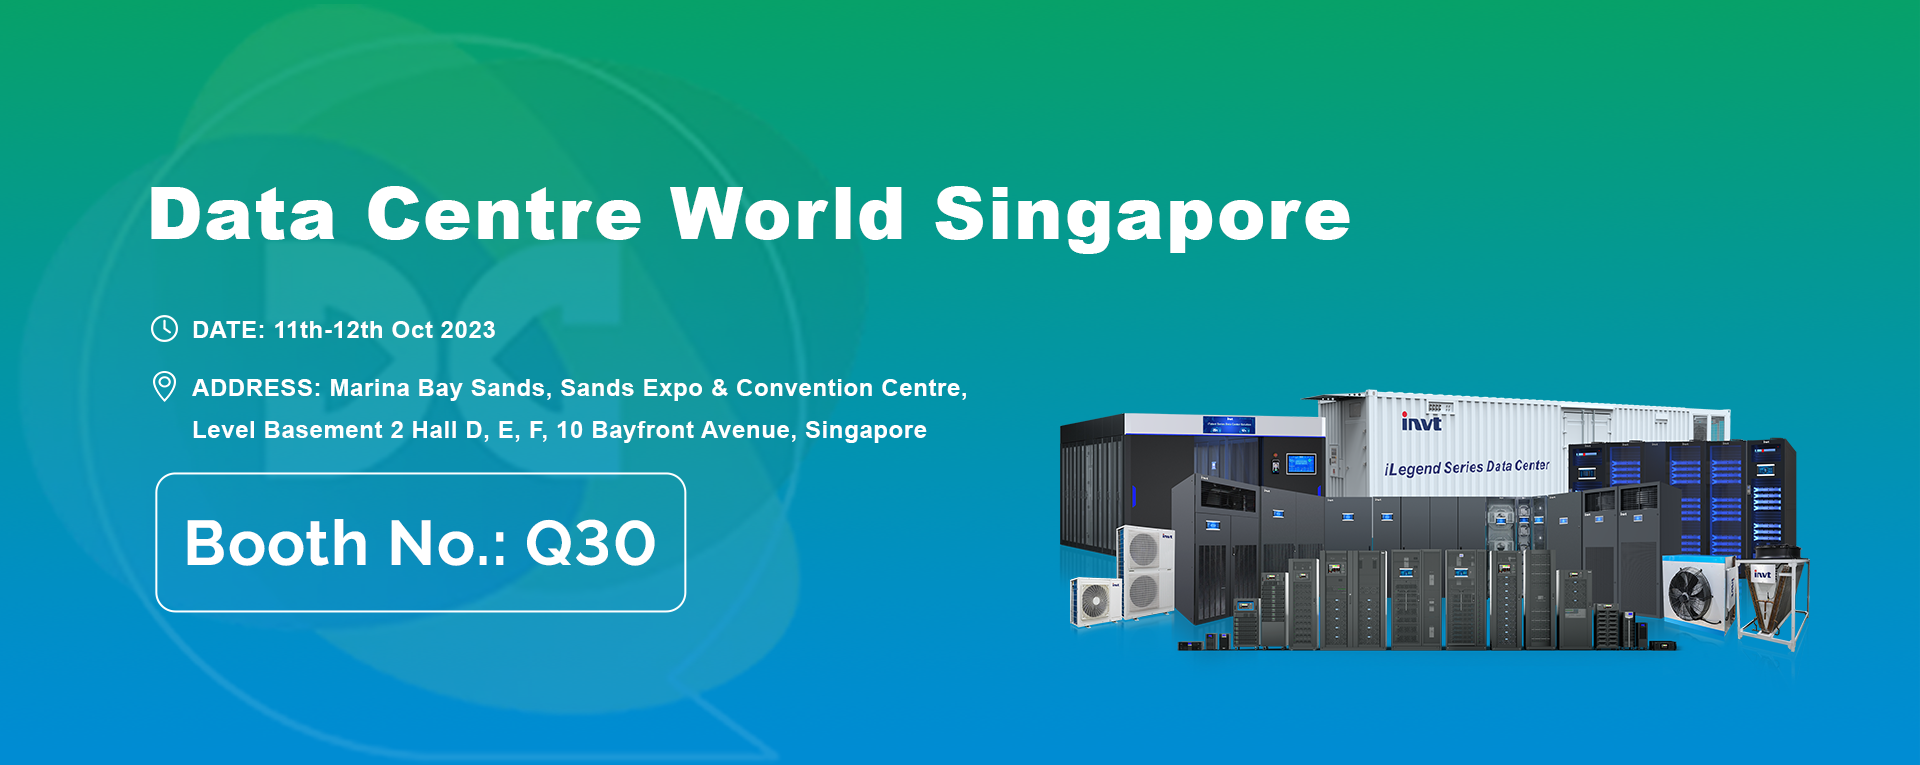 Data Centetre World Singapore